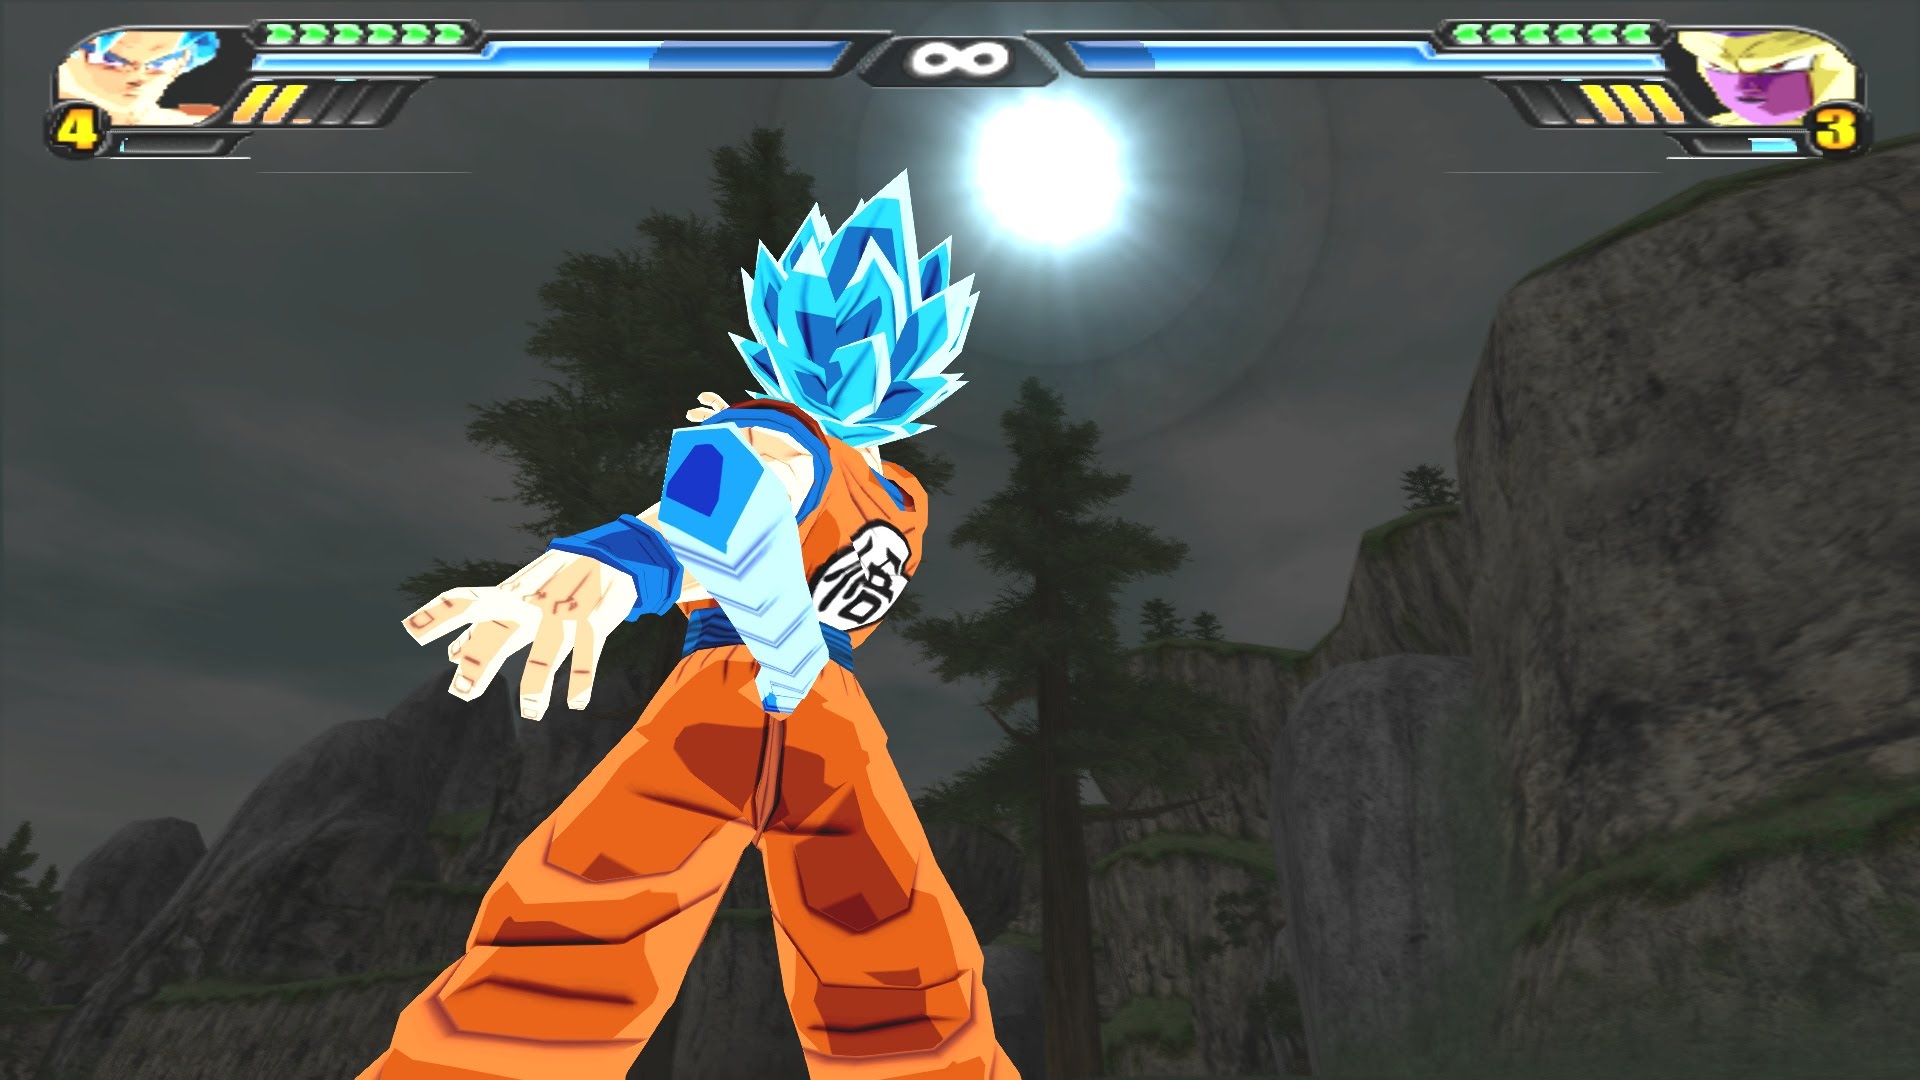 Dragon Ball Z: Budokai Tenkaichi 3 screenshots, images and